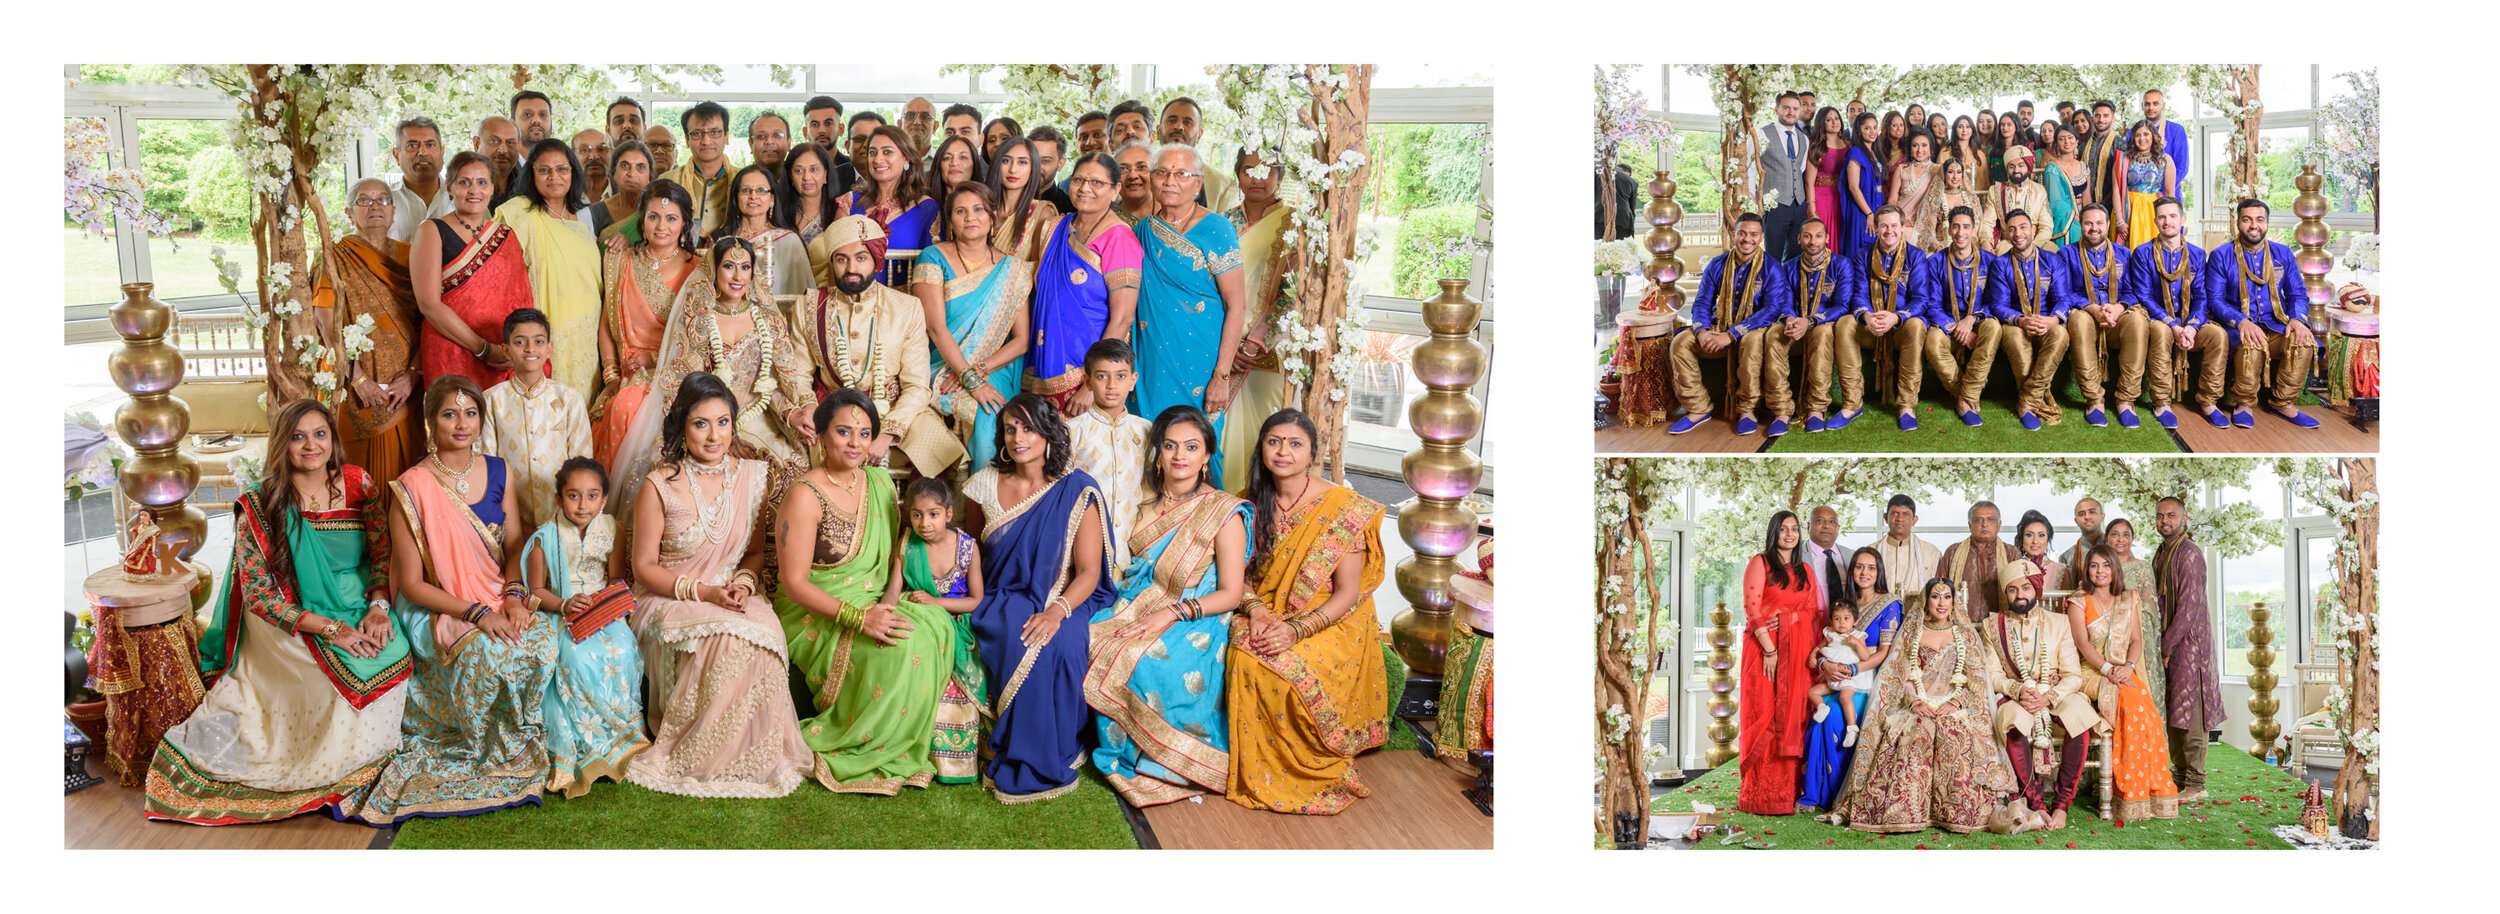 satnam photography luxury hindu wedding album -36.jpg